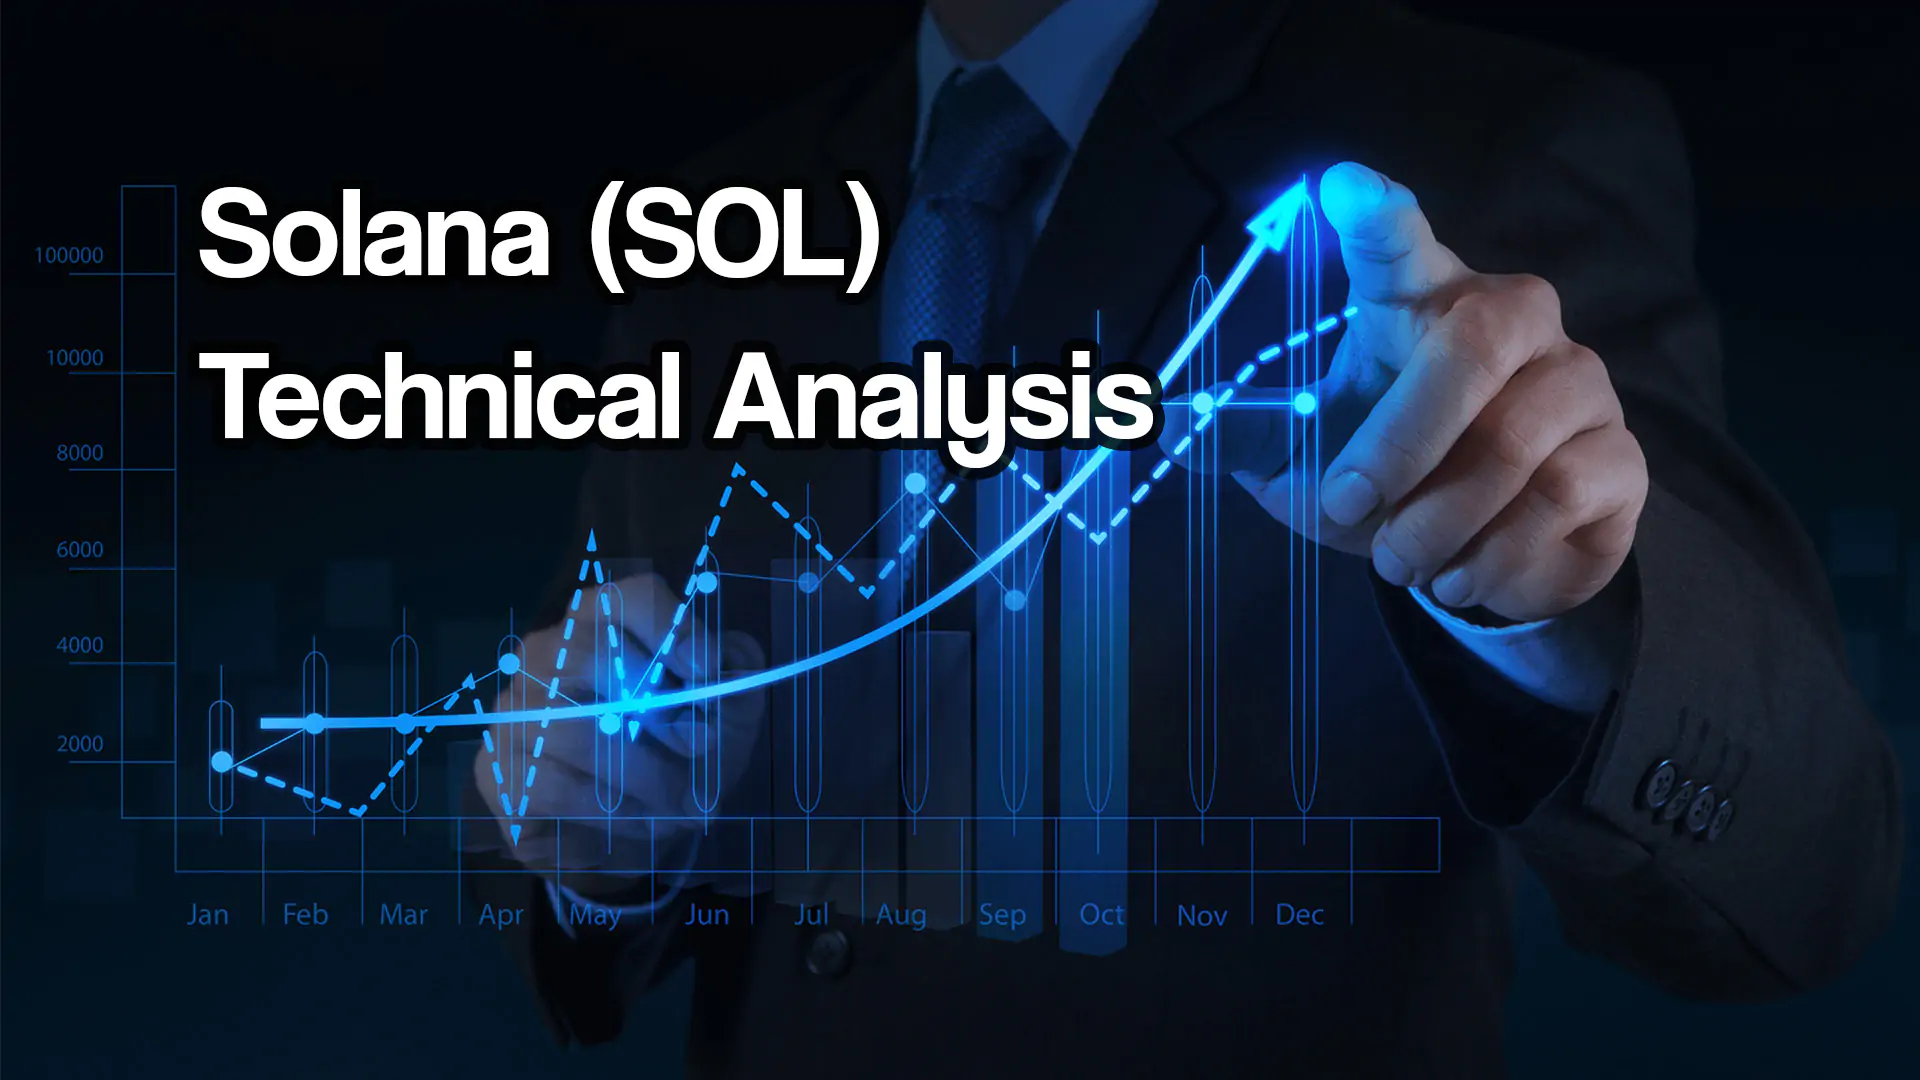 Solana (SOL) Technical Analysis